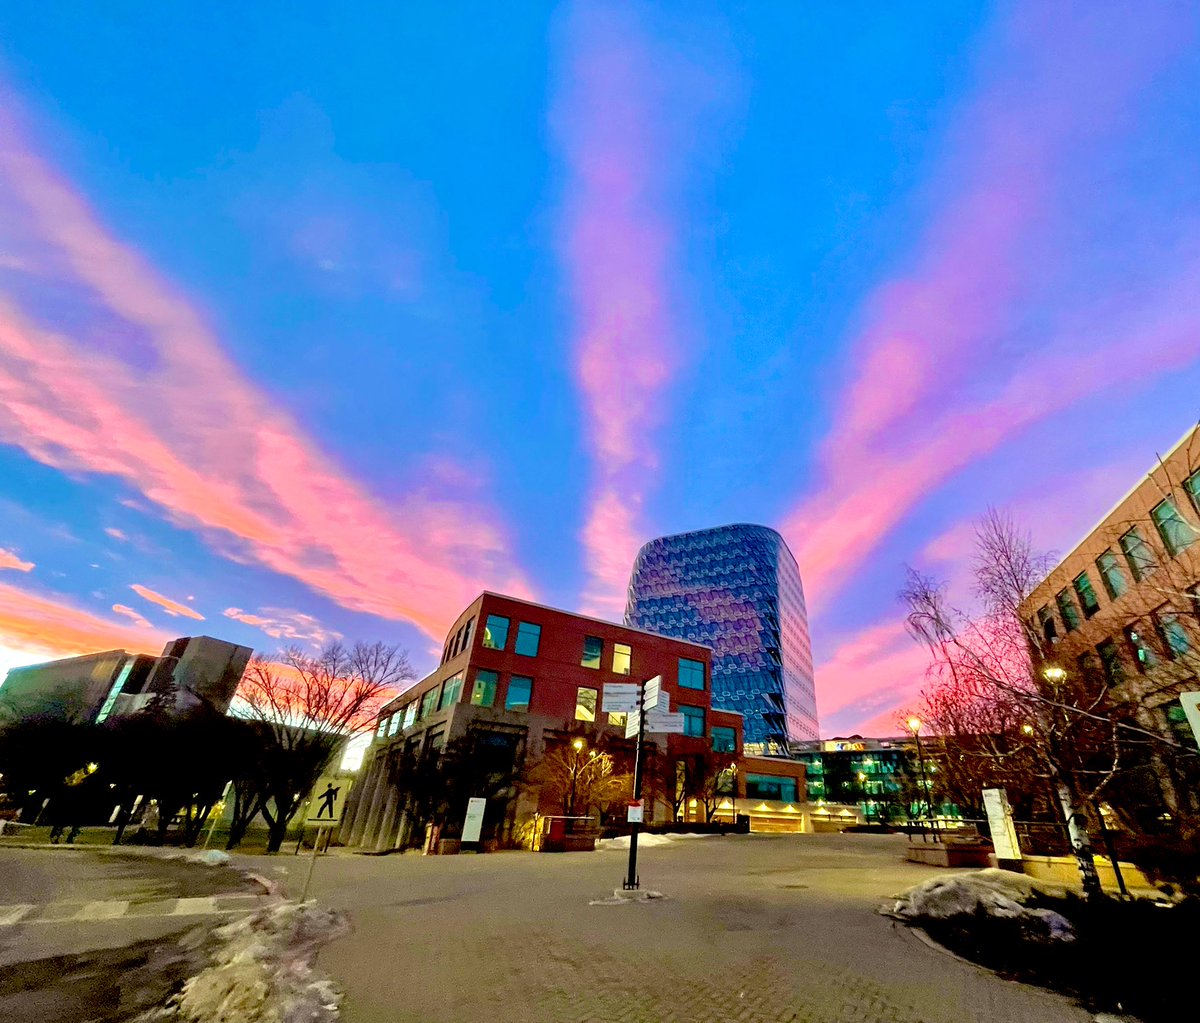 A most stunning Sunset at University of Calgary last evening.